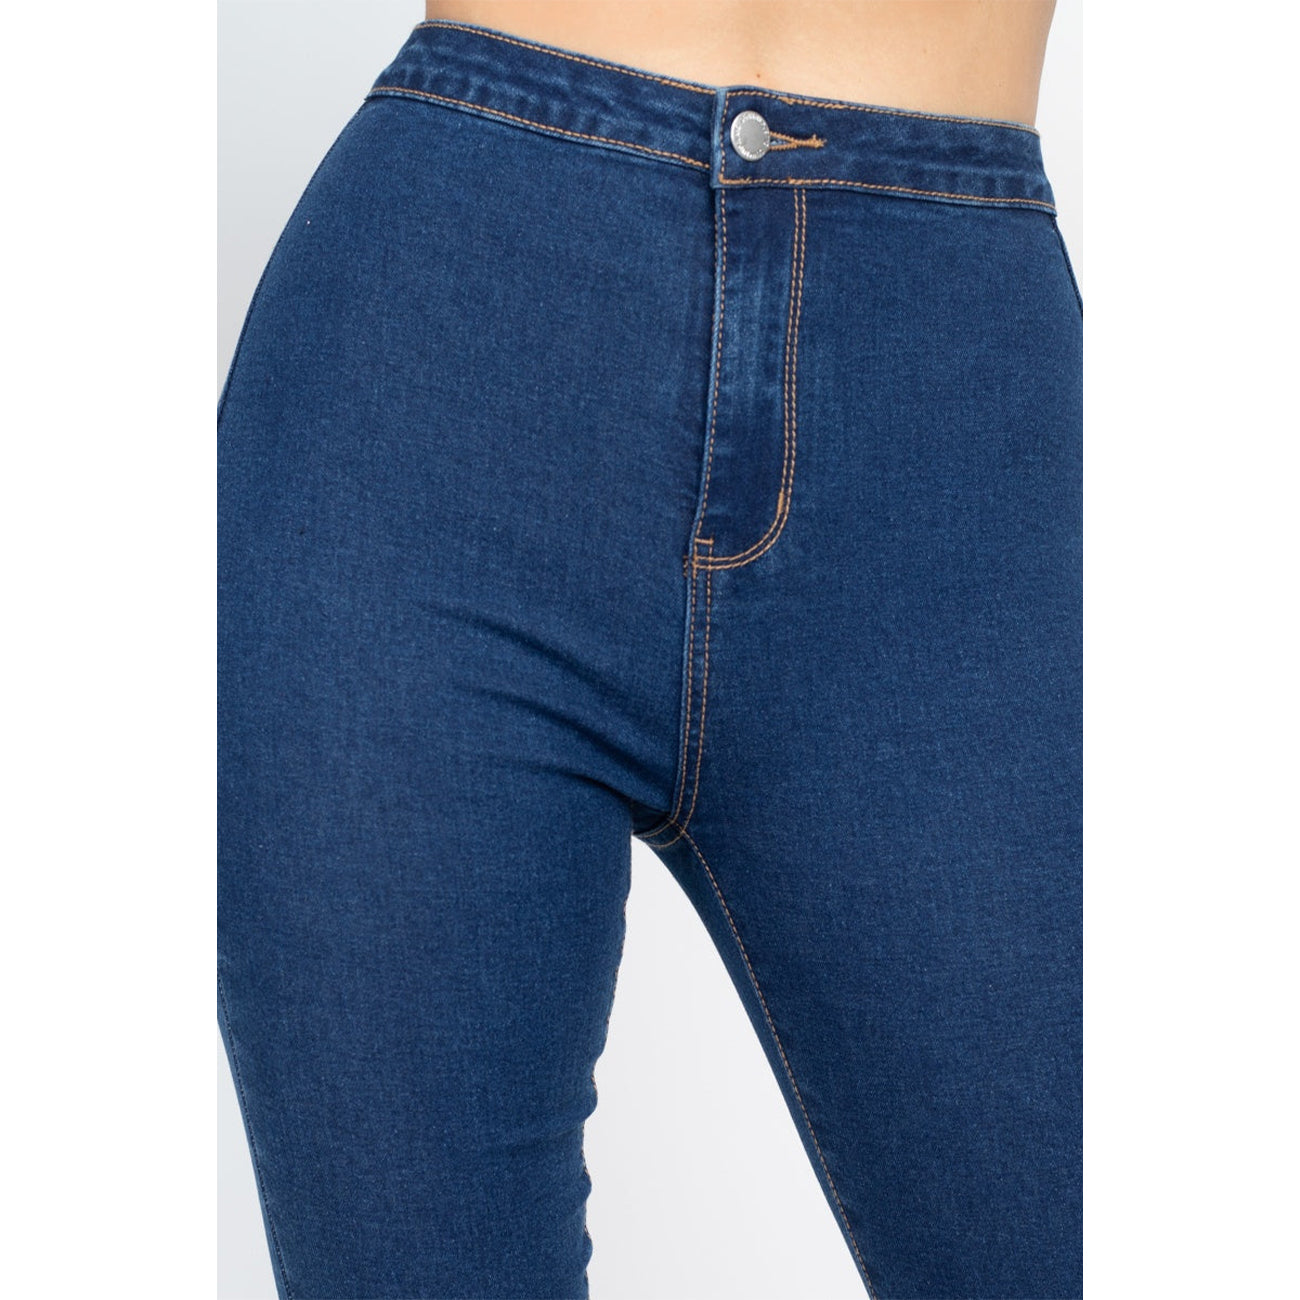 Dark Denim High Waist Zippered Capri Jeans